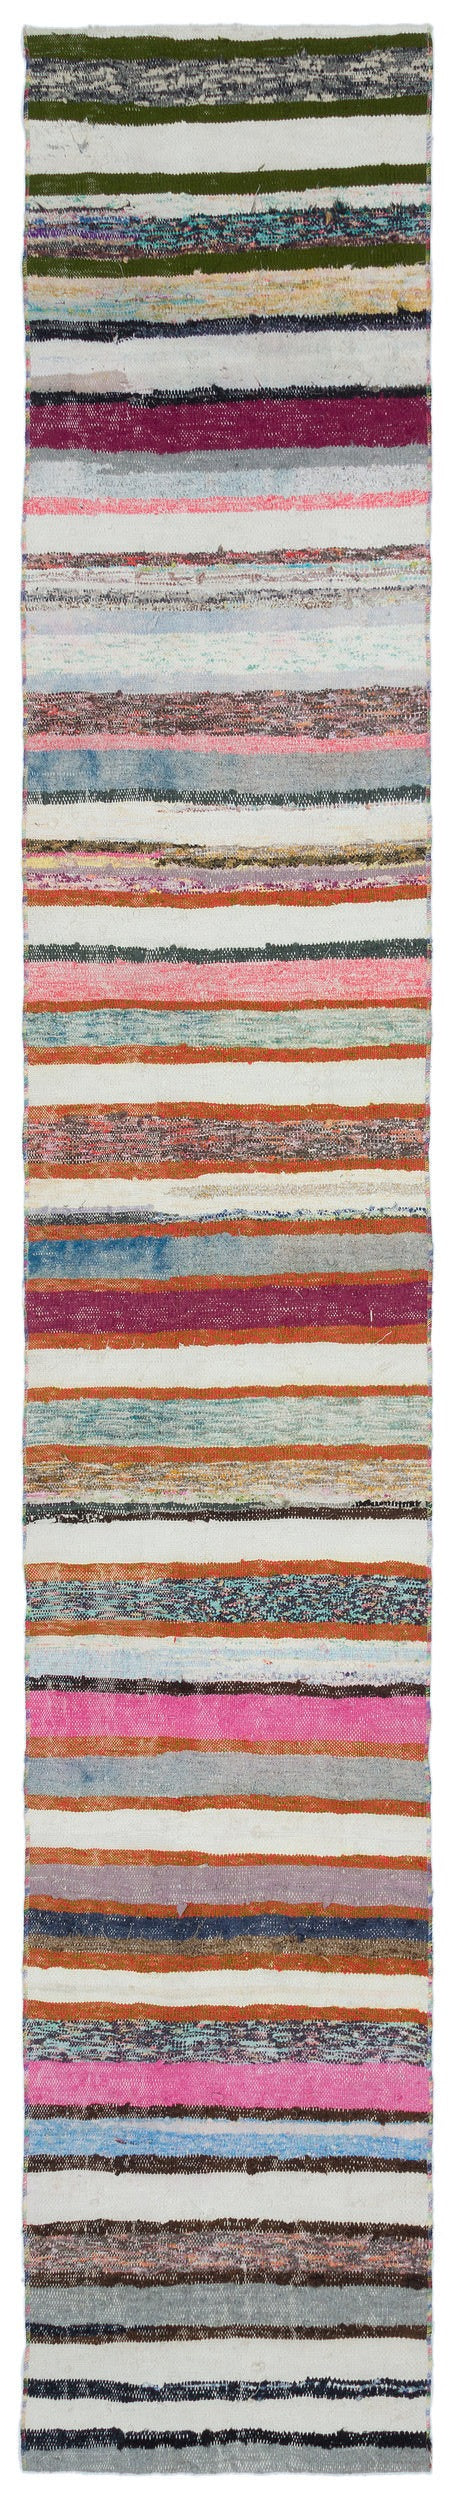 Cretan Beige Striped Wool Hand-Woven Carpet 057 x 340